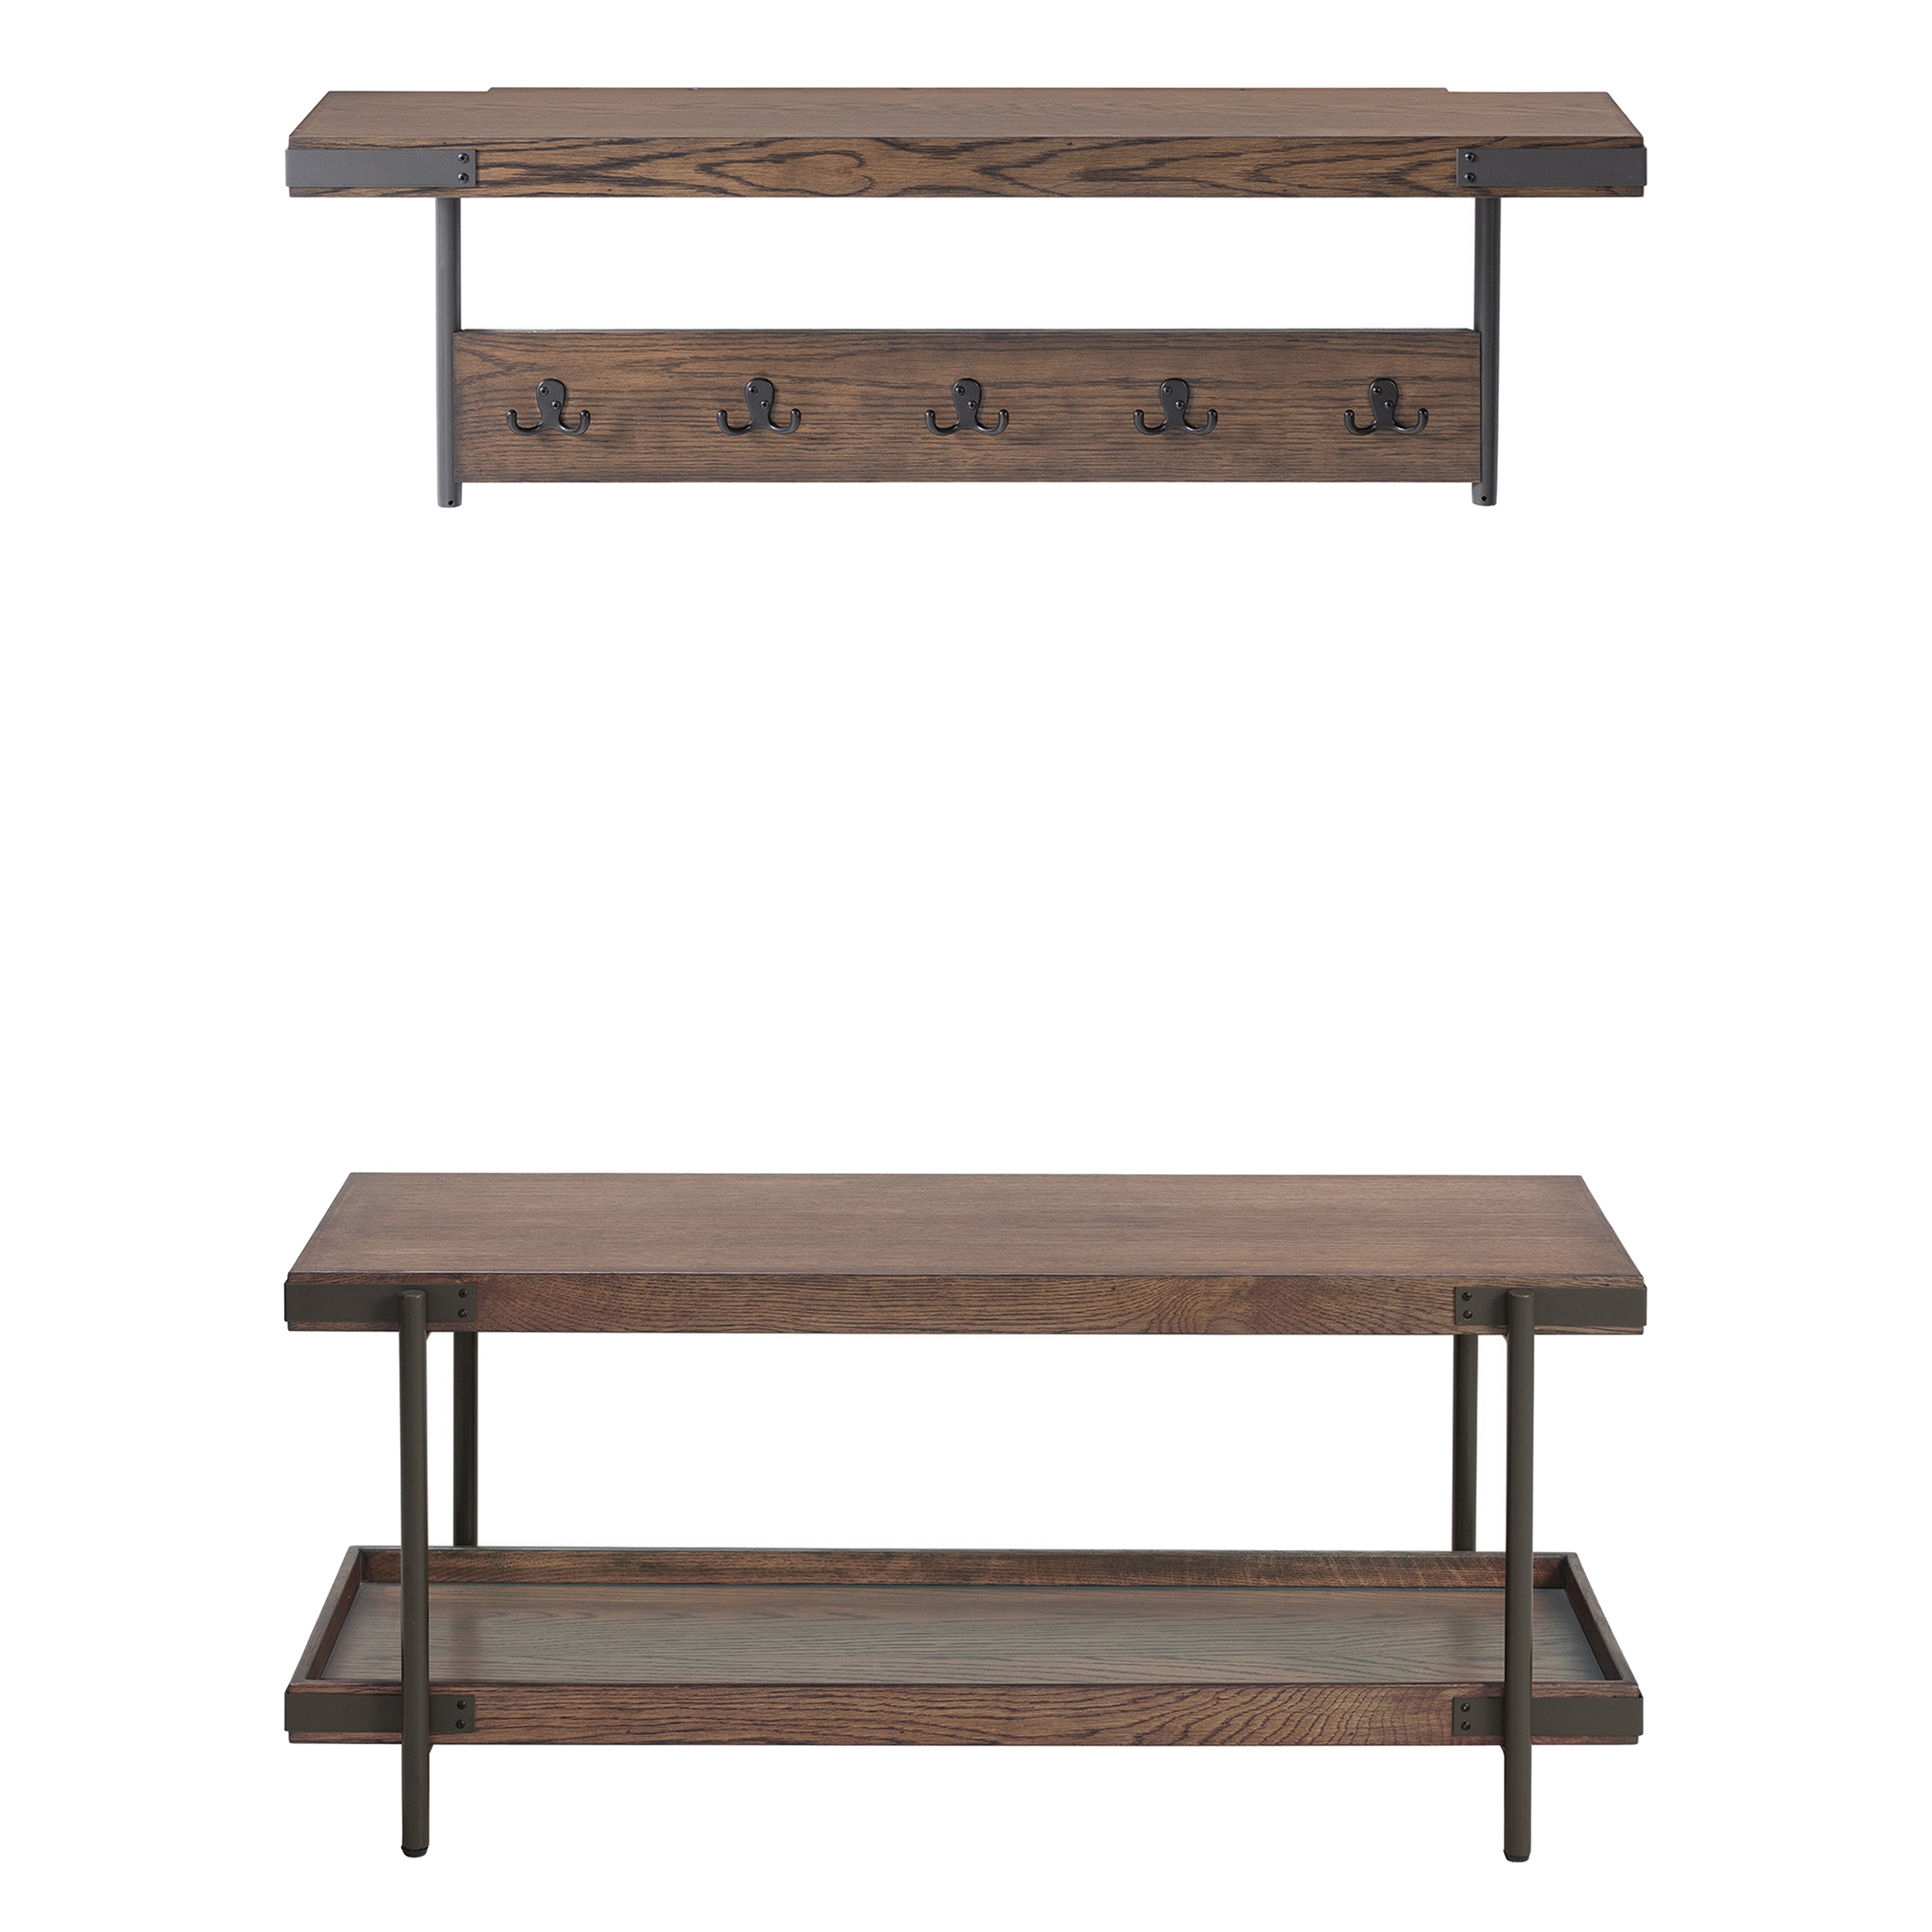 Alaterre Furniture Millwork 40 Wood and Zinc Metal Bench with Coat Hook  Shelf, 1 - Kroger